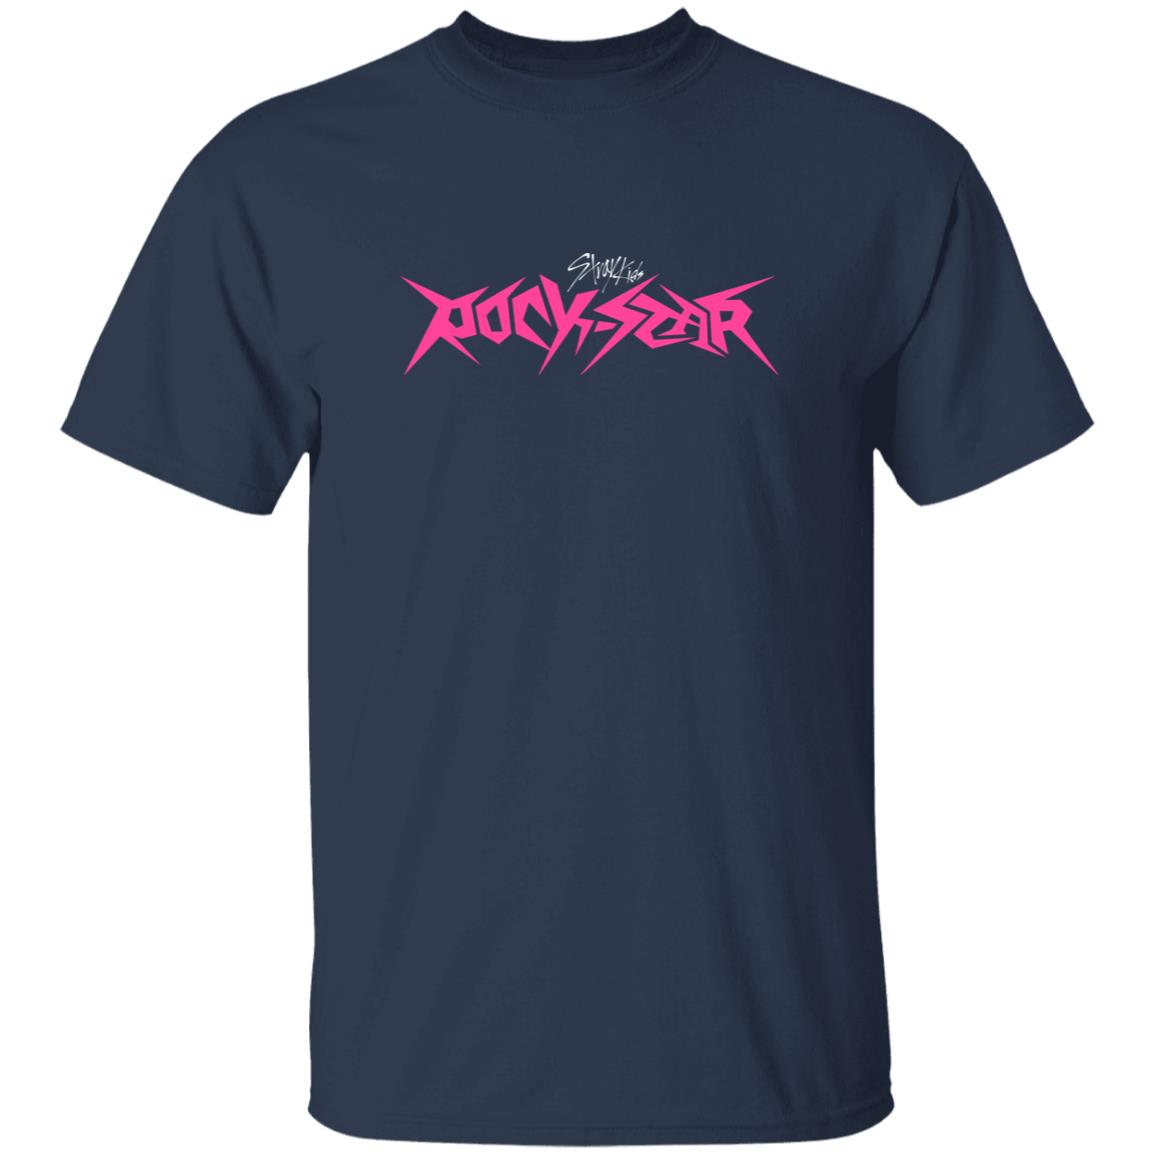 Stray Kids Rock Star T-Shirt